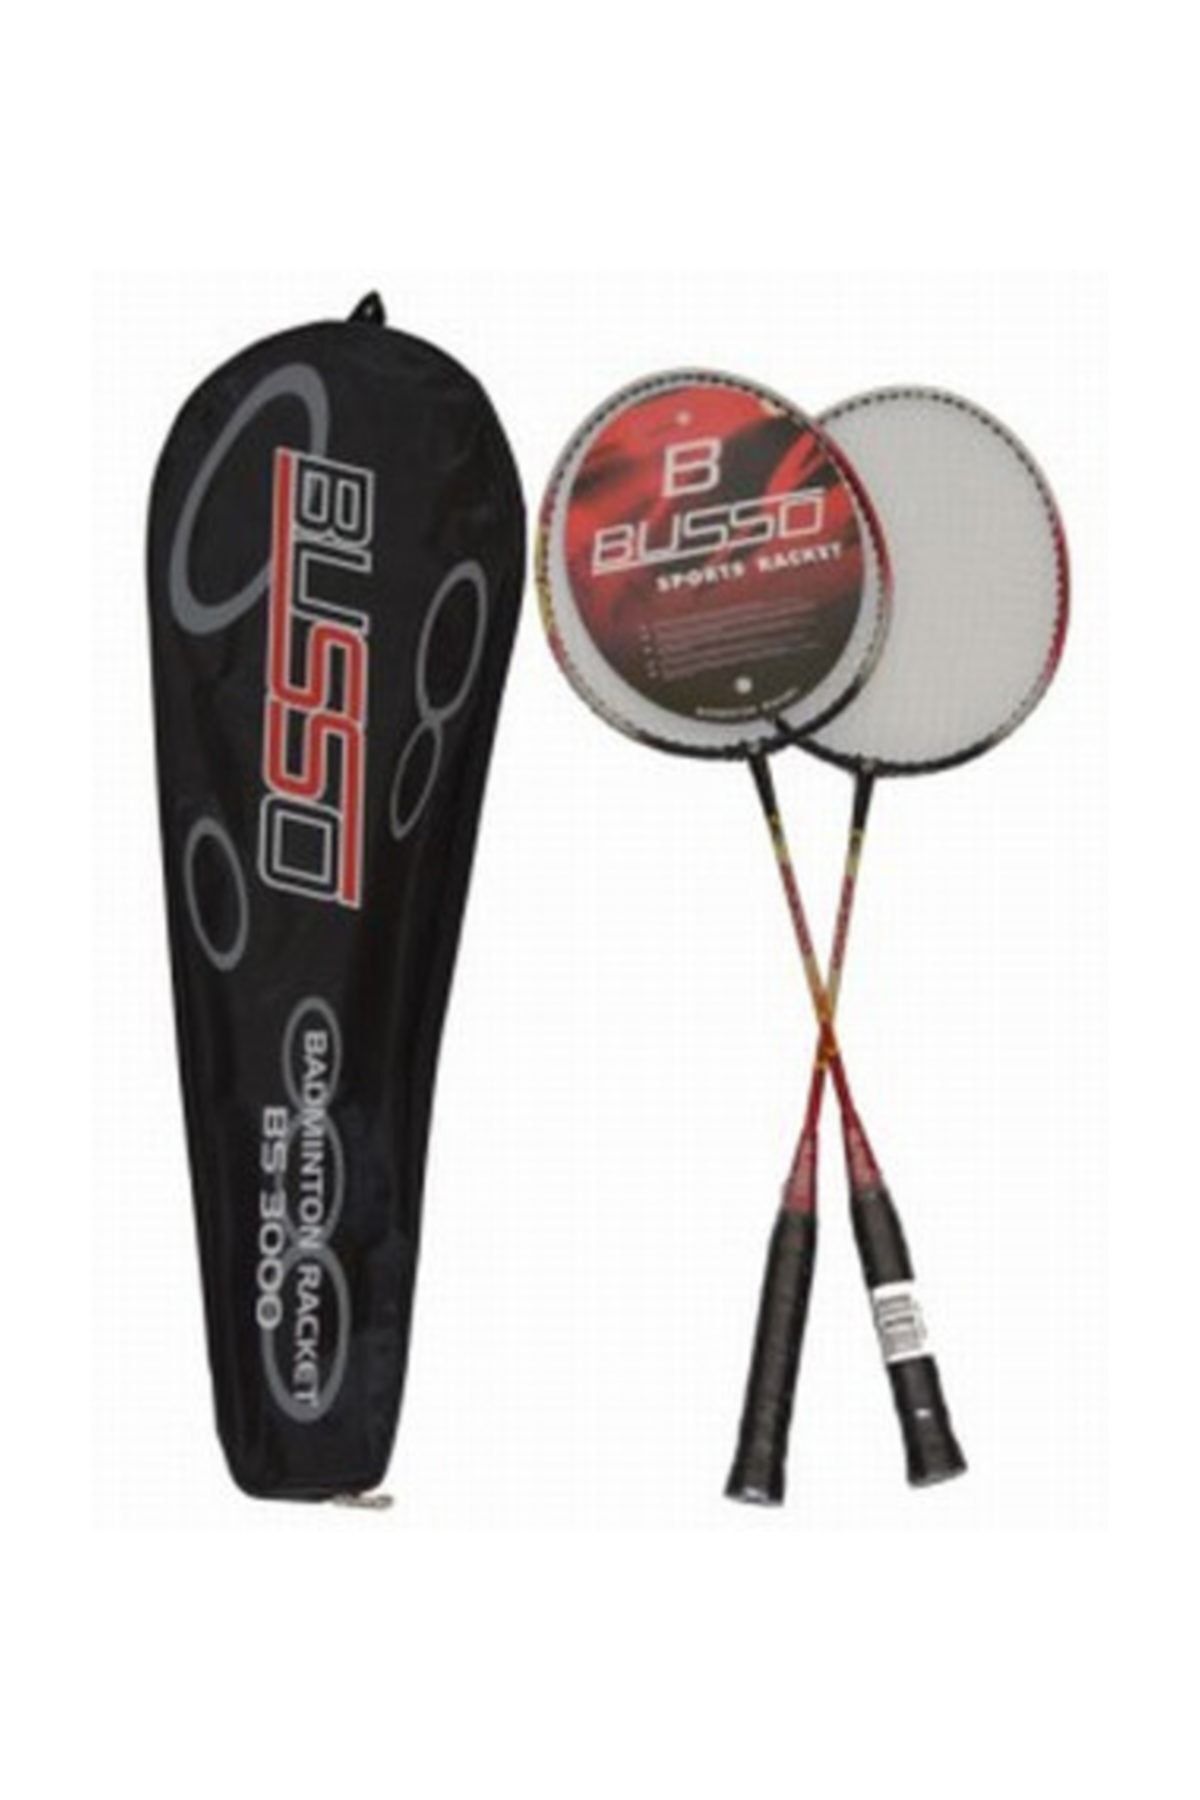 Busso BS 3000 Badminton Raket